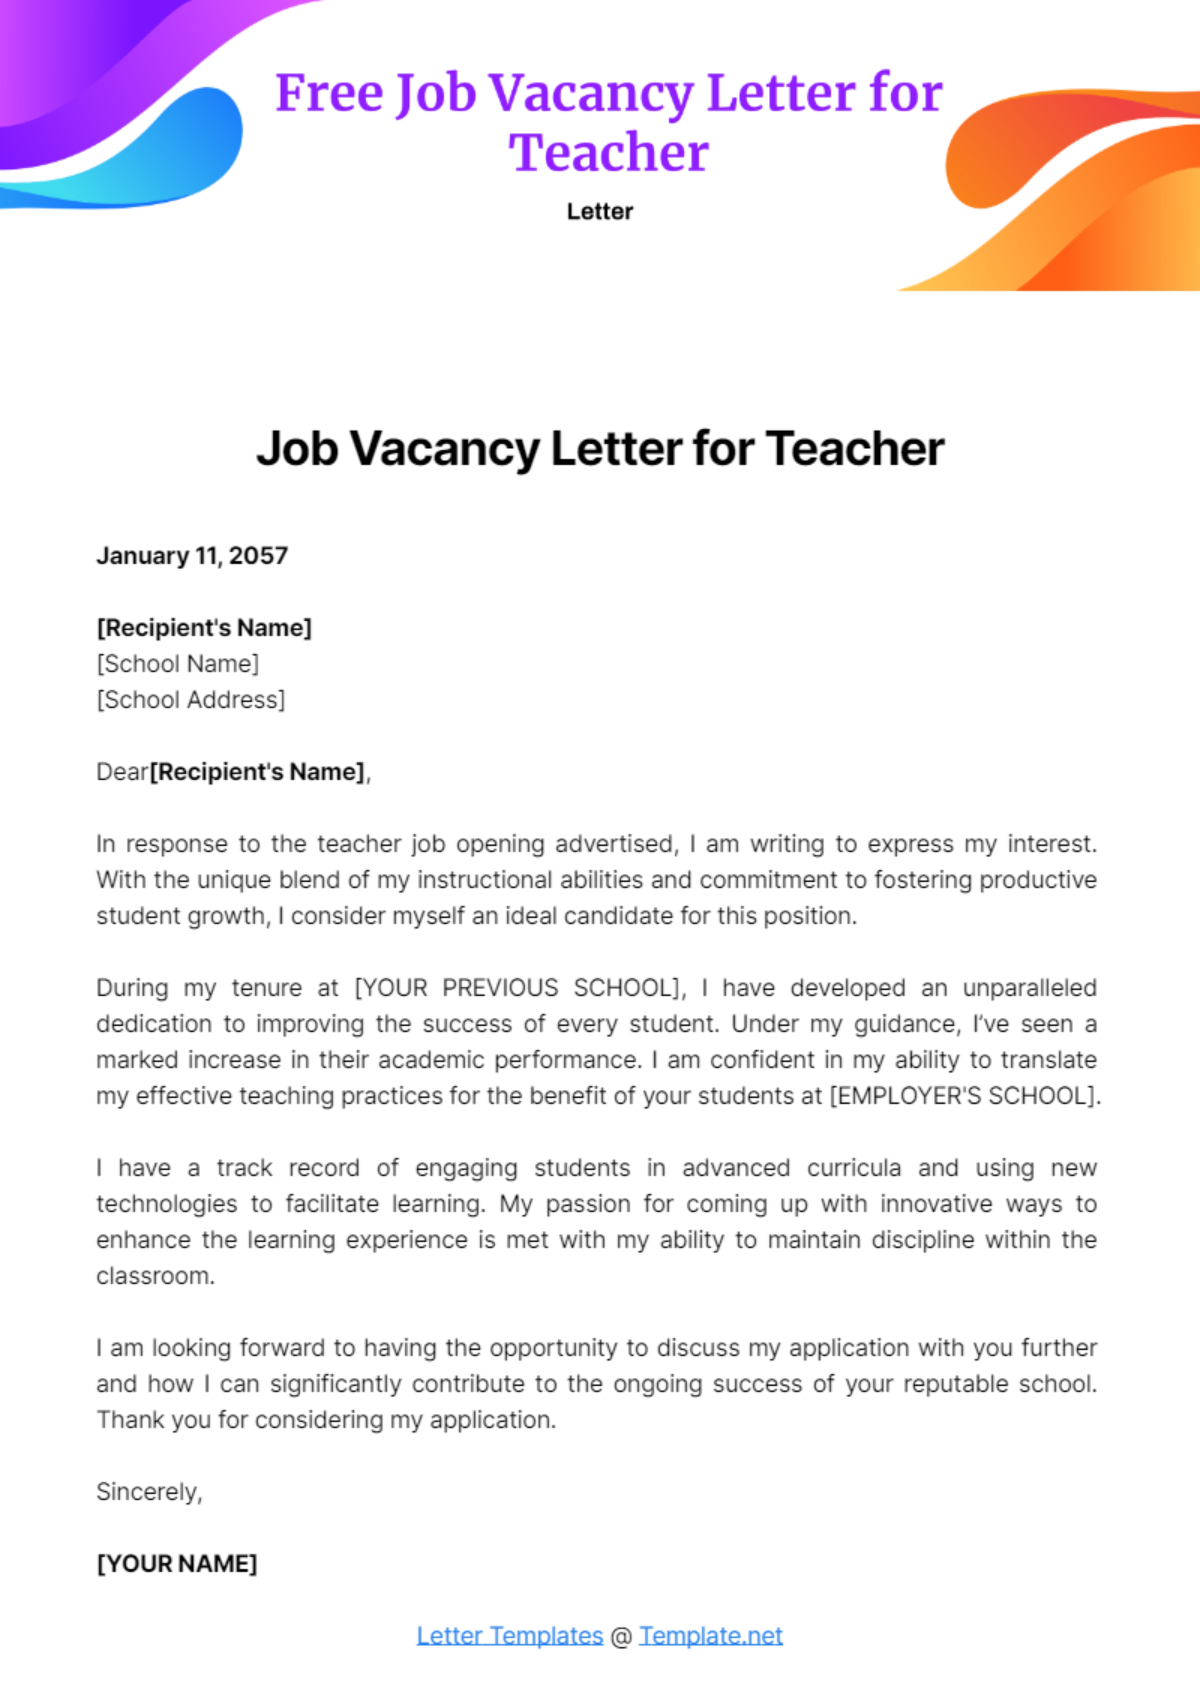 Free Job Vacancy Letter for Teacher Template